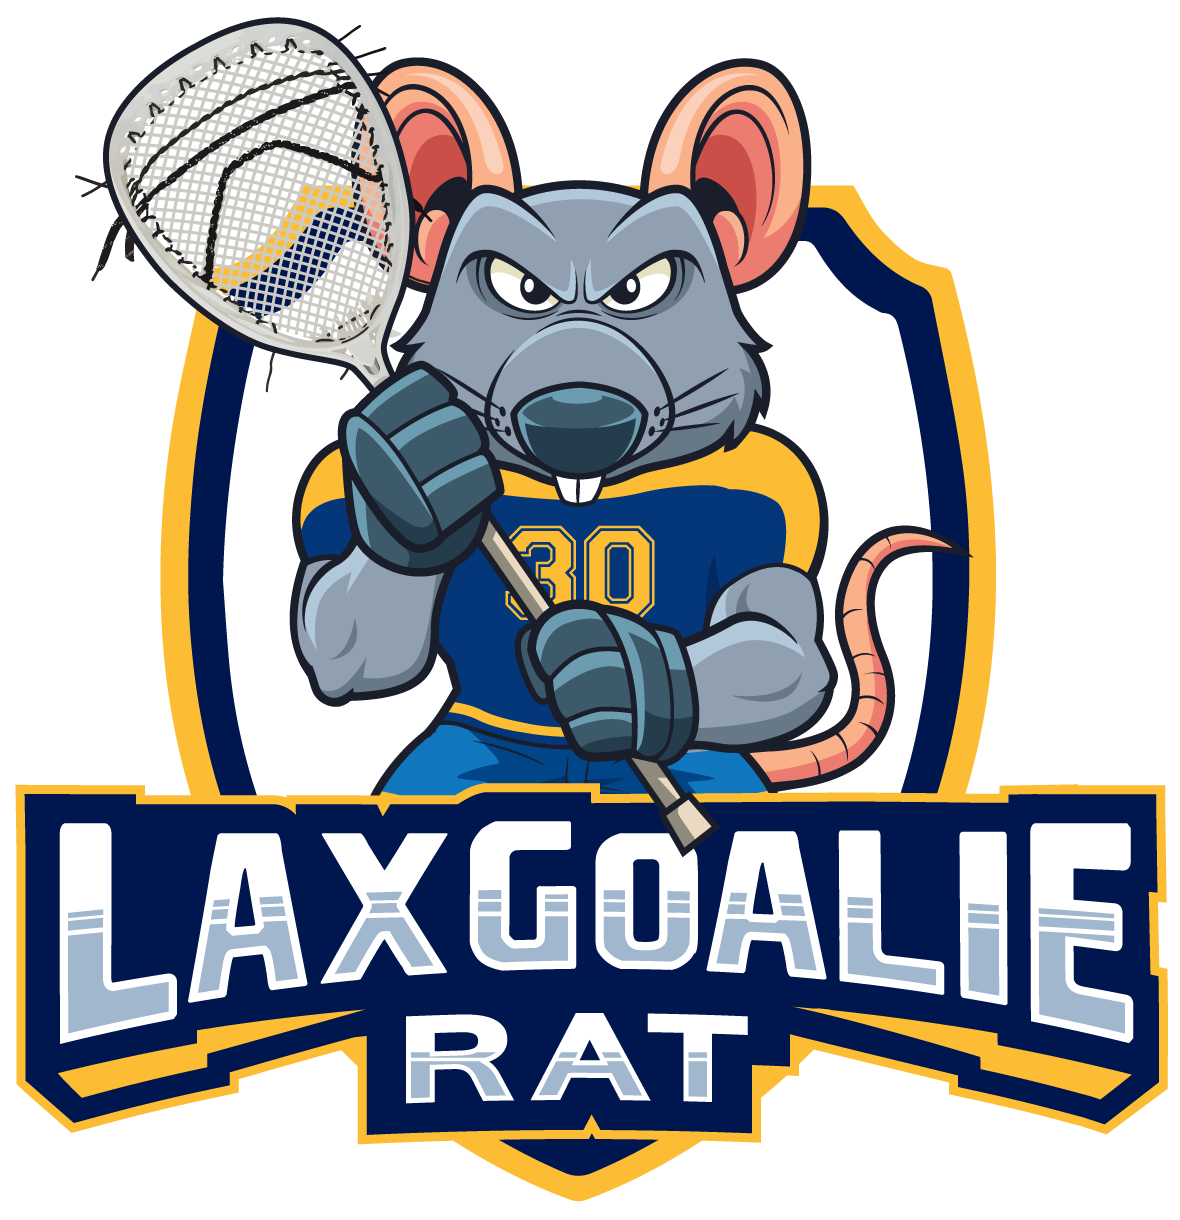 Lax Goalie Rat